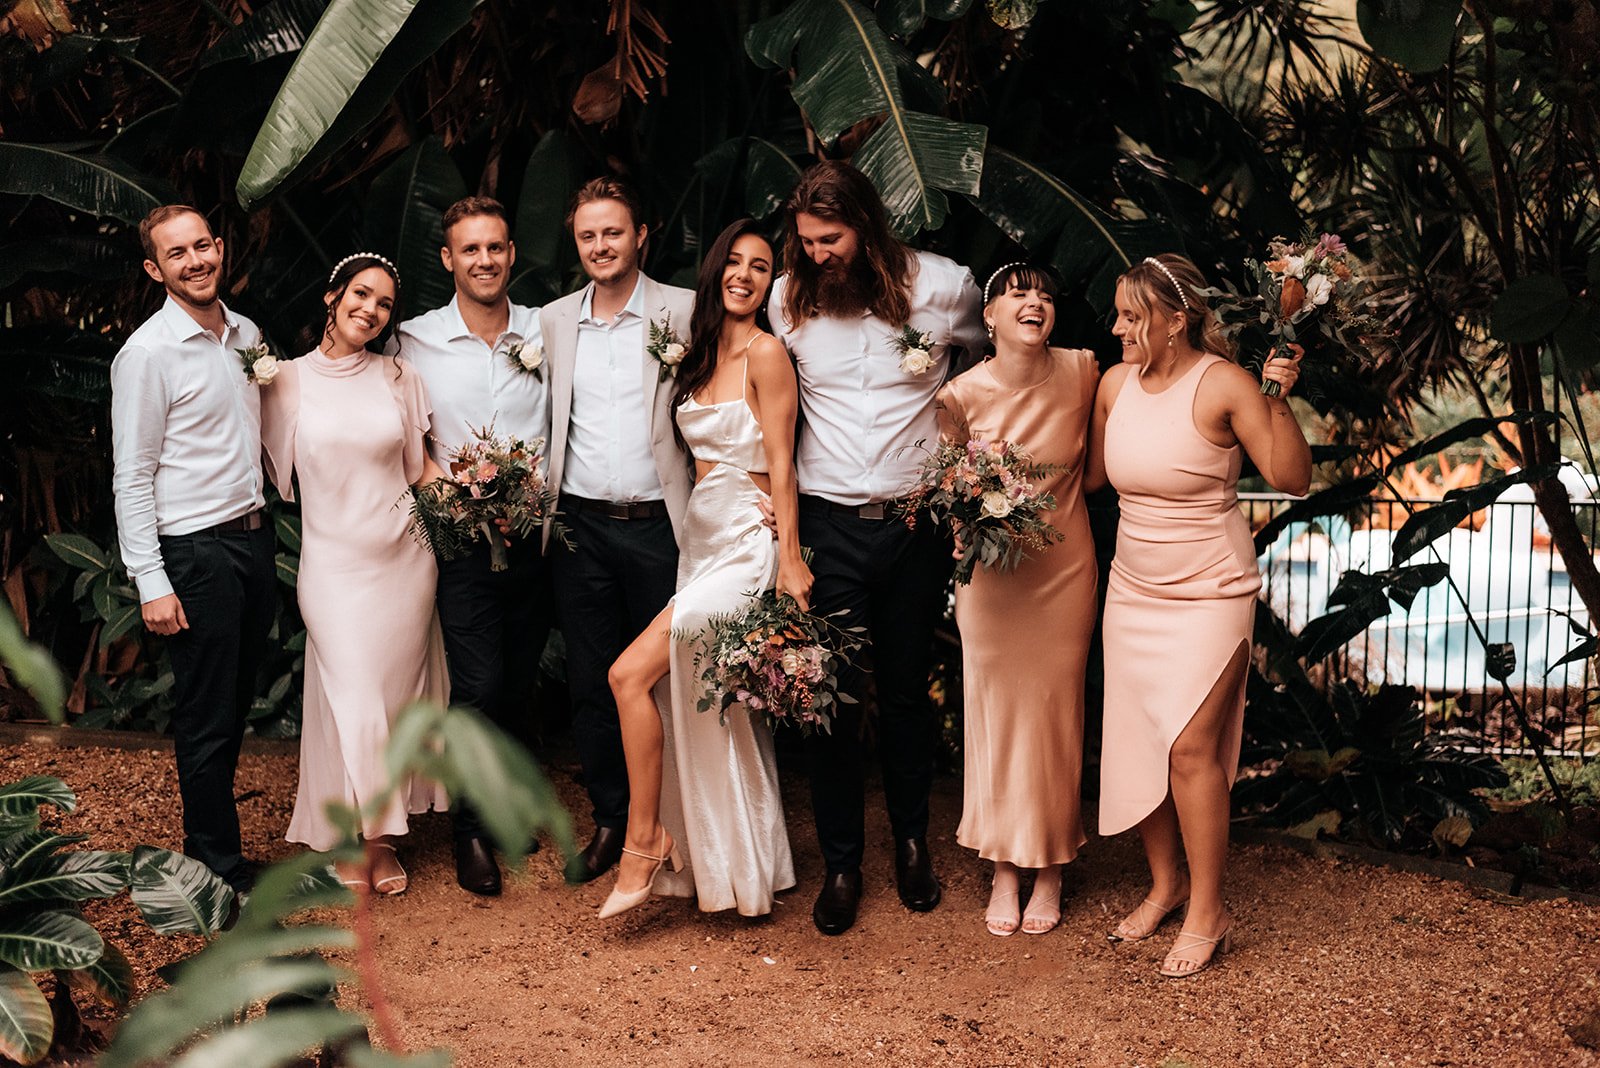 LOVELENSCAPES • The Figs Byron Bay Wedding • Chosen by Kyha • T&C • 513_websize.jpg